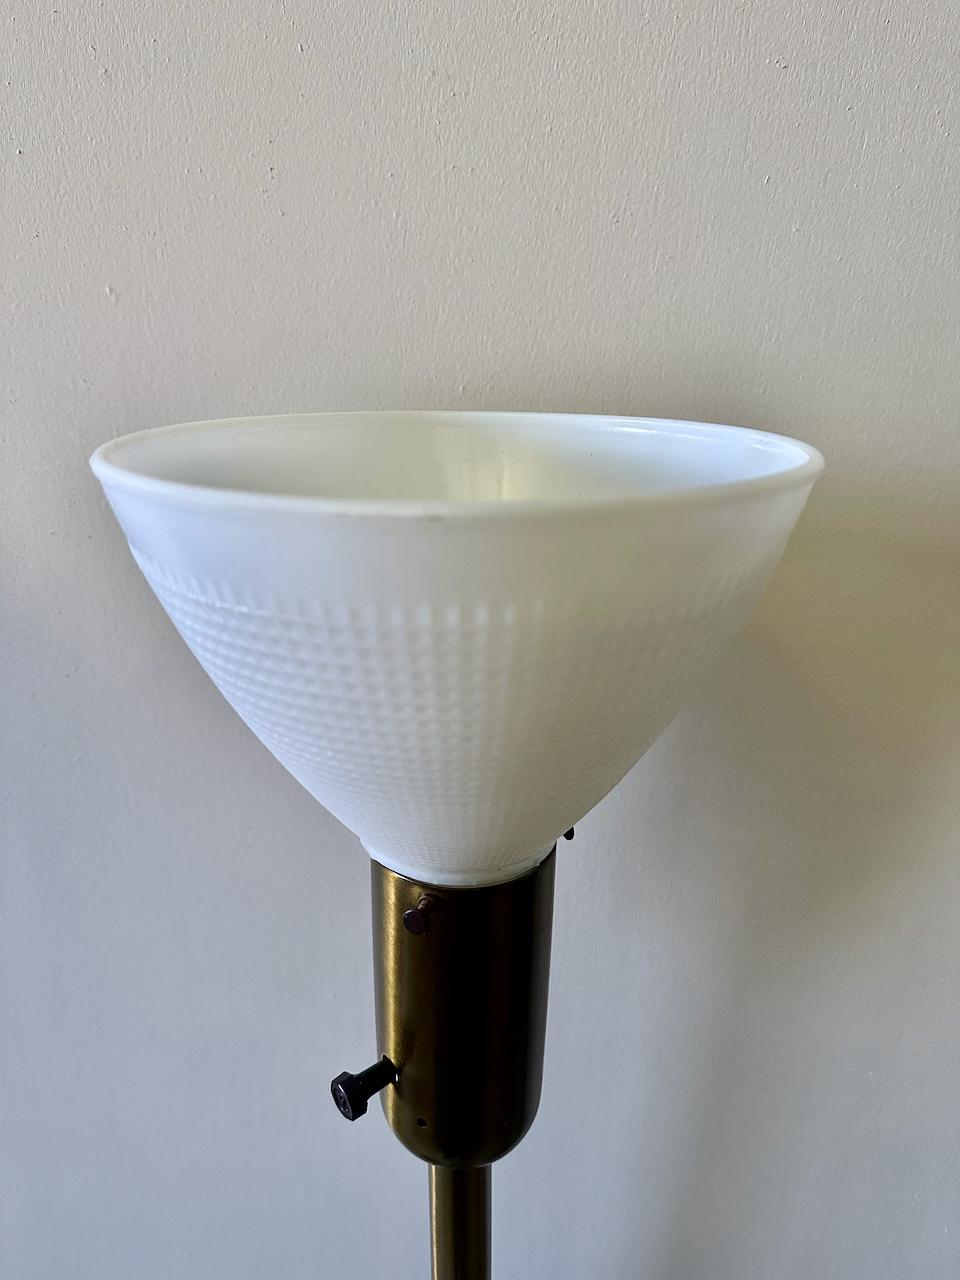 antique brass floor lamp with milk glass shade